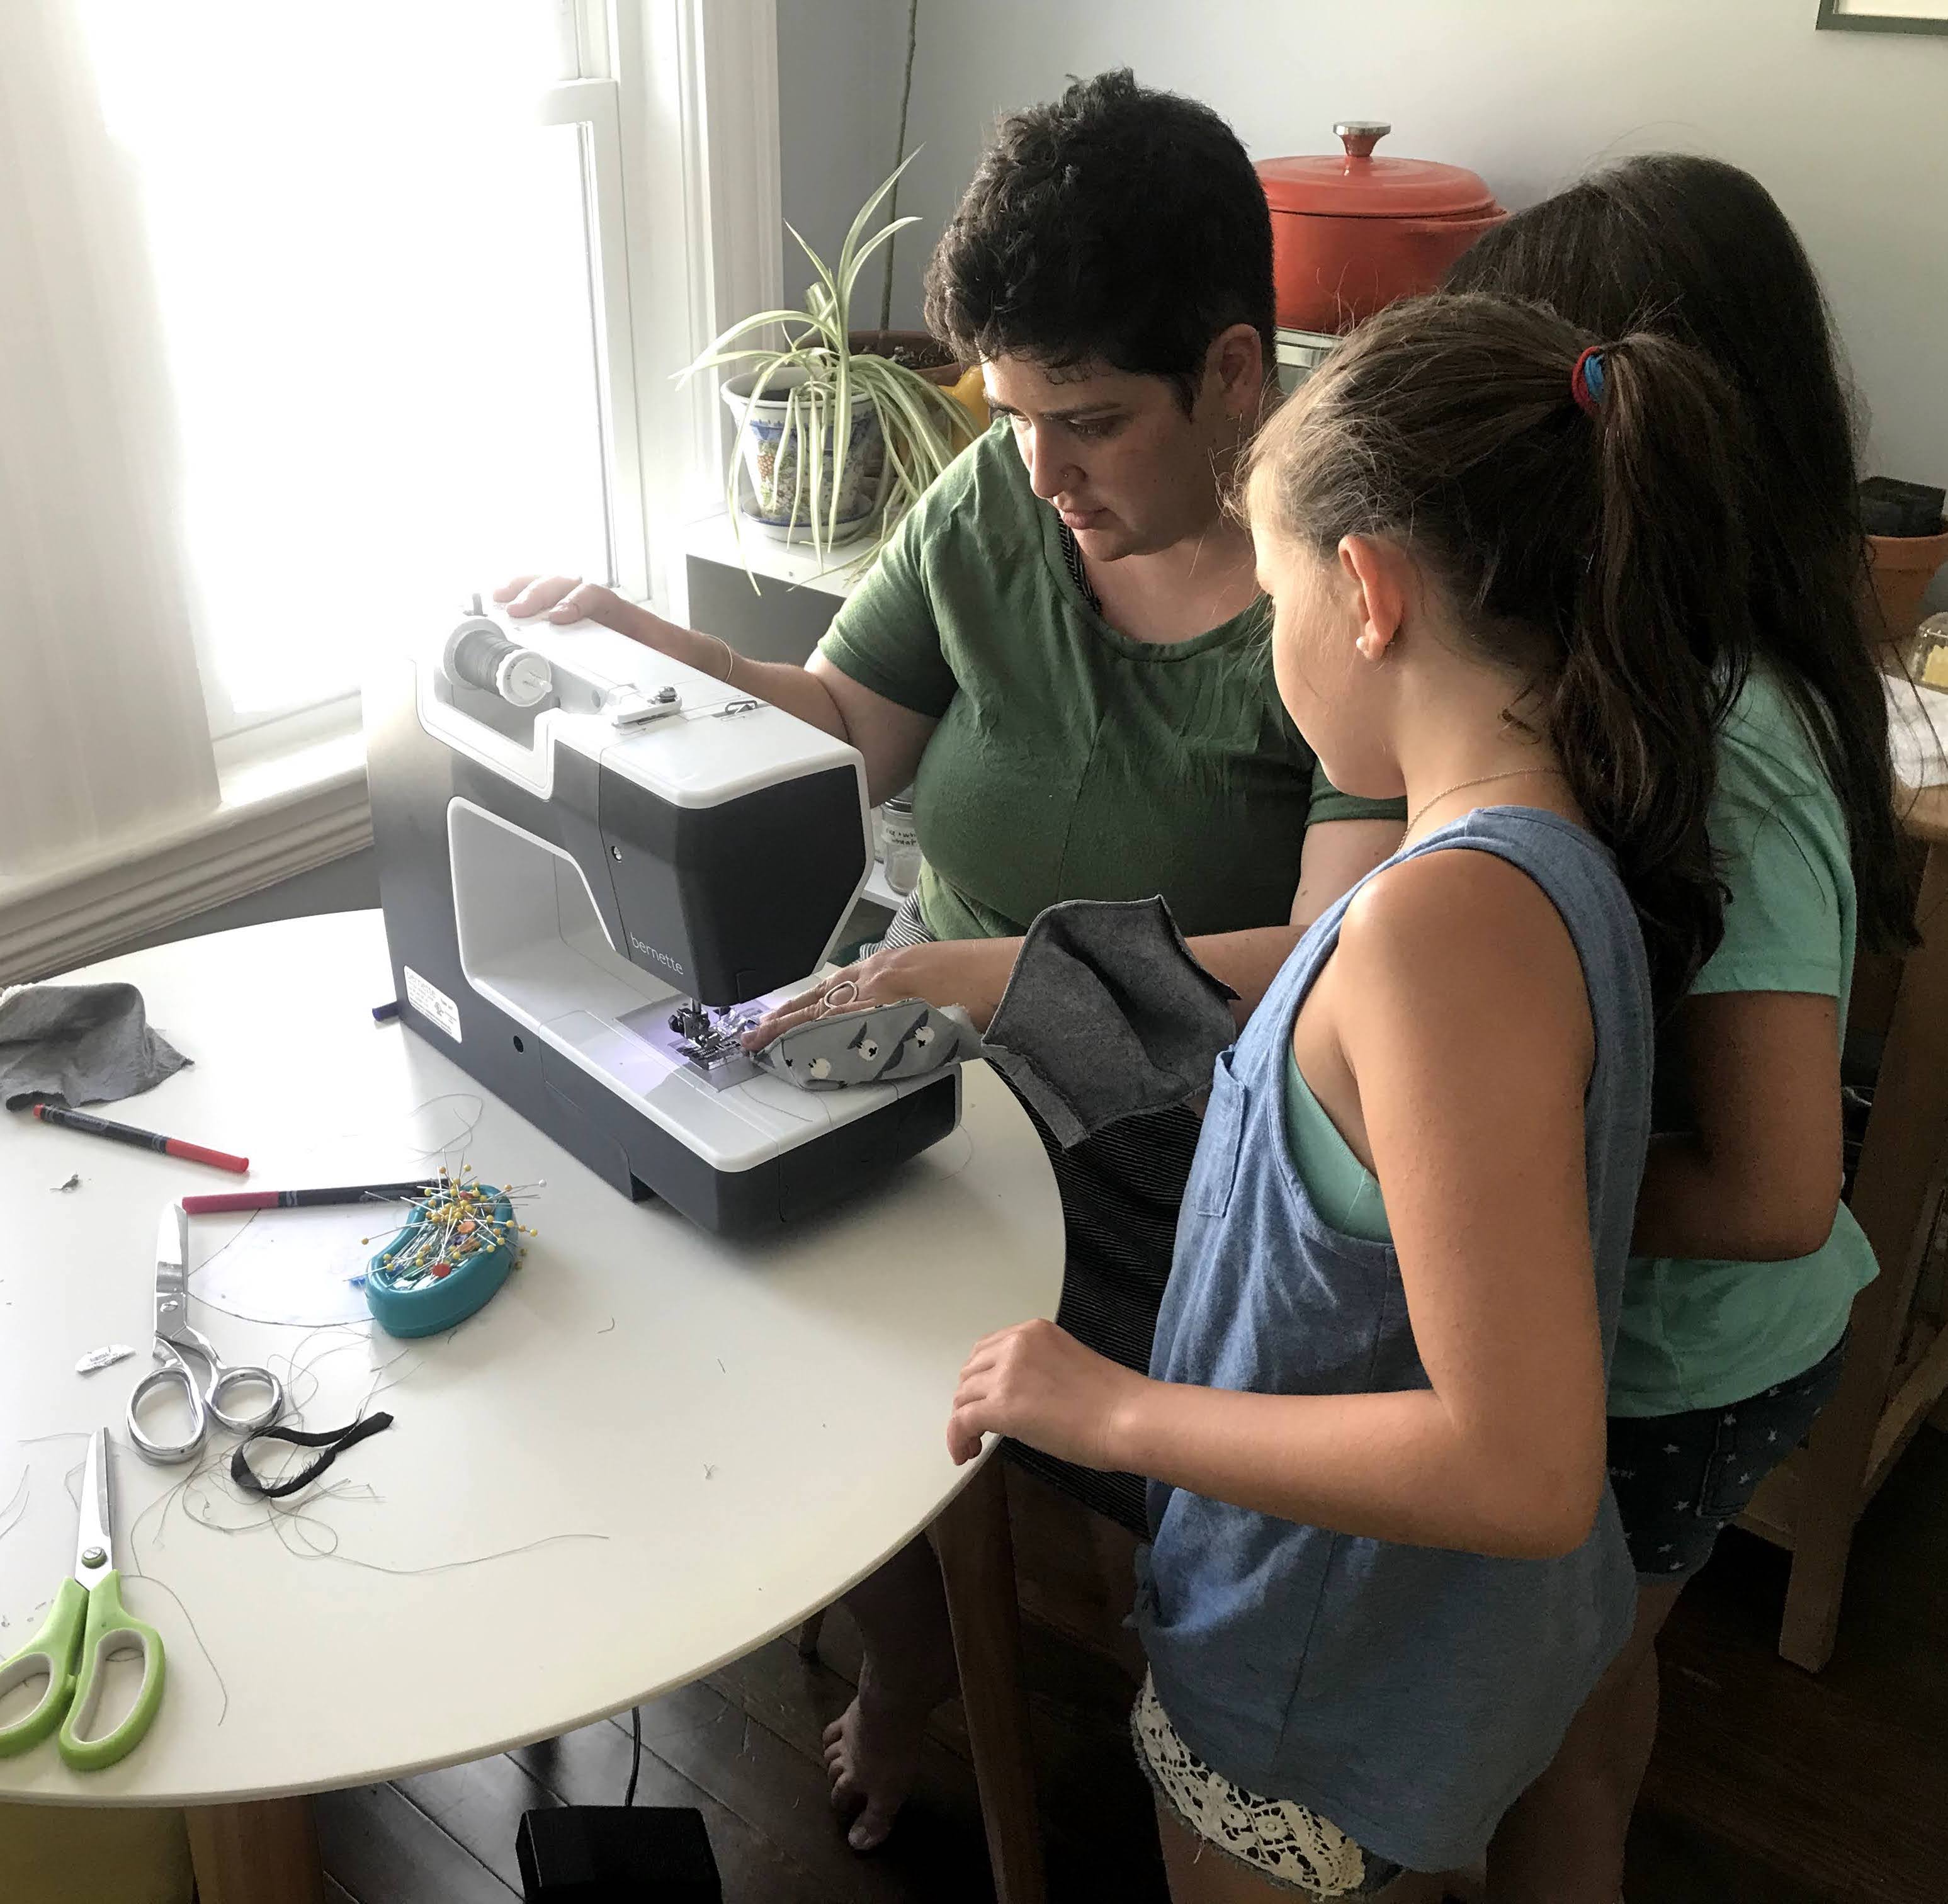 2 children and one adult (Miriam) gathered around a sewing machine